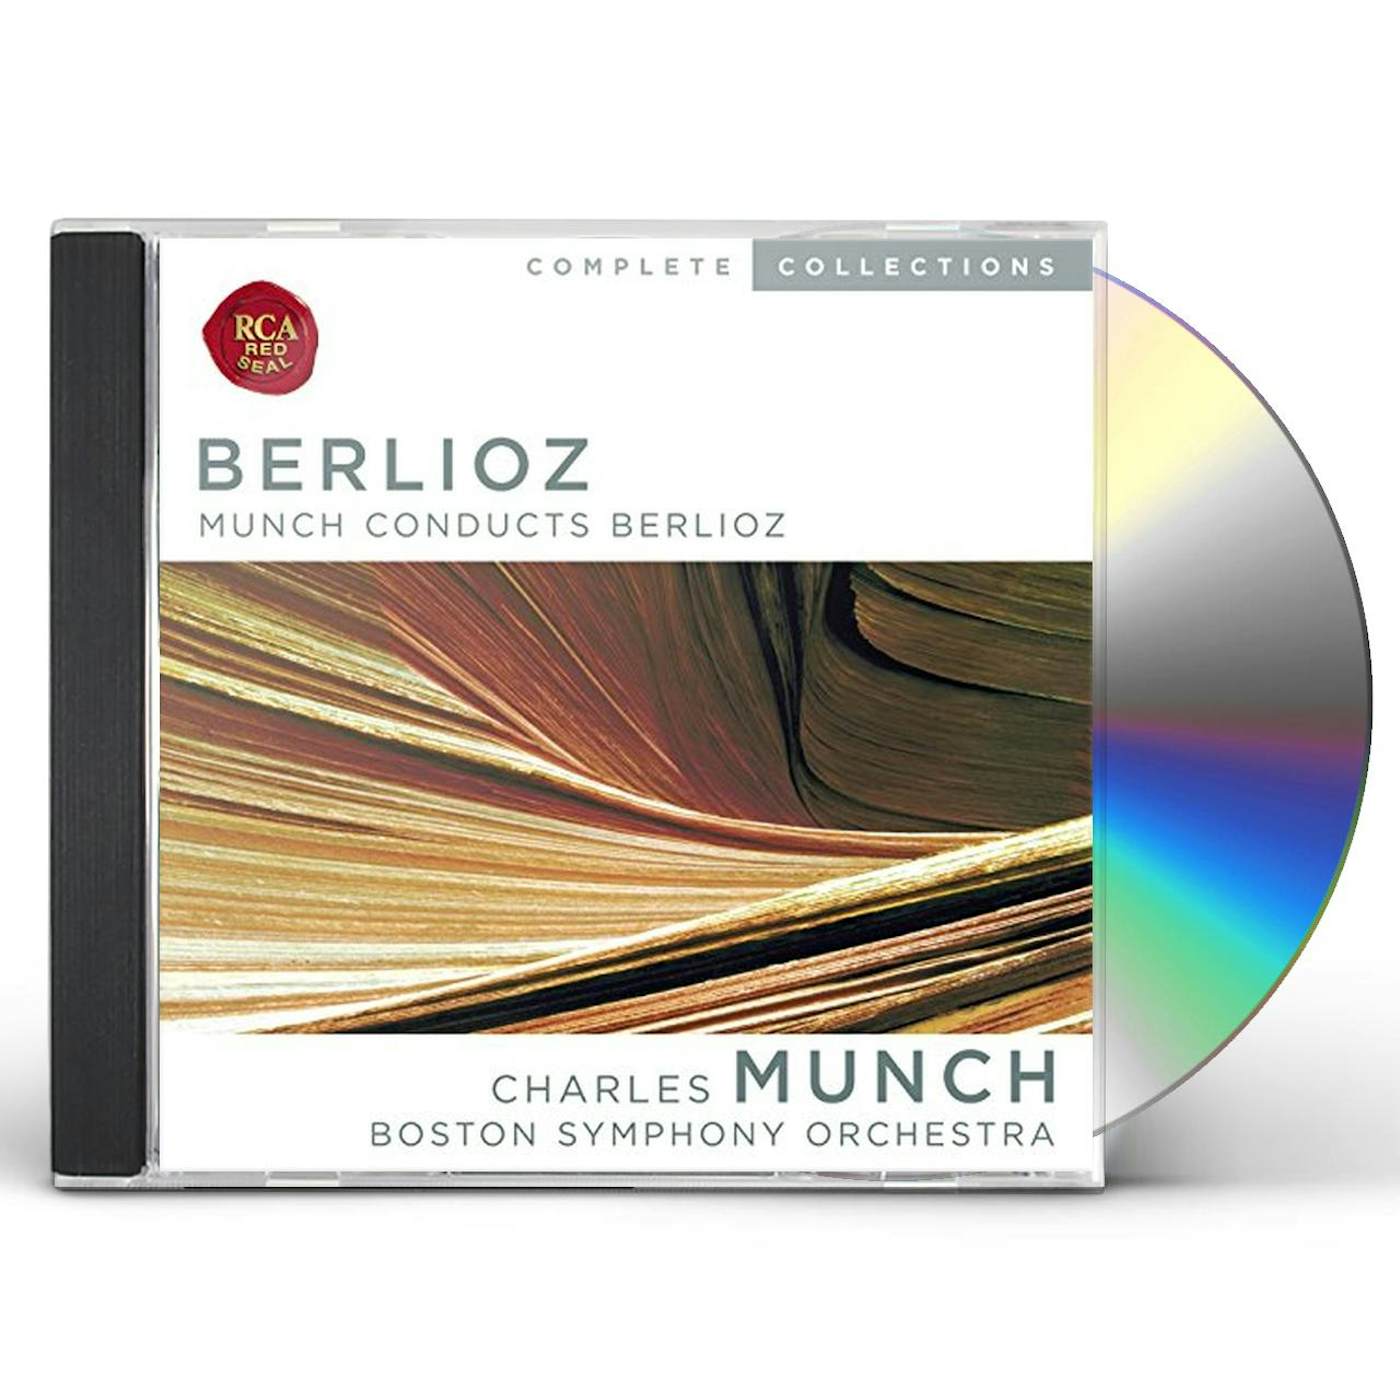 CHARLES MUNCH CONDUCTS BERLIOZ CD